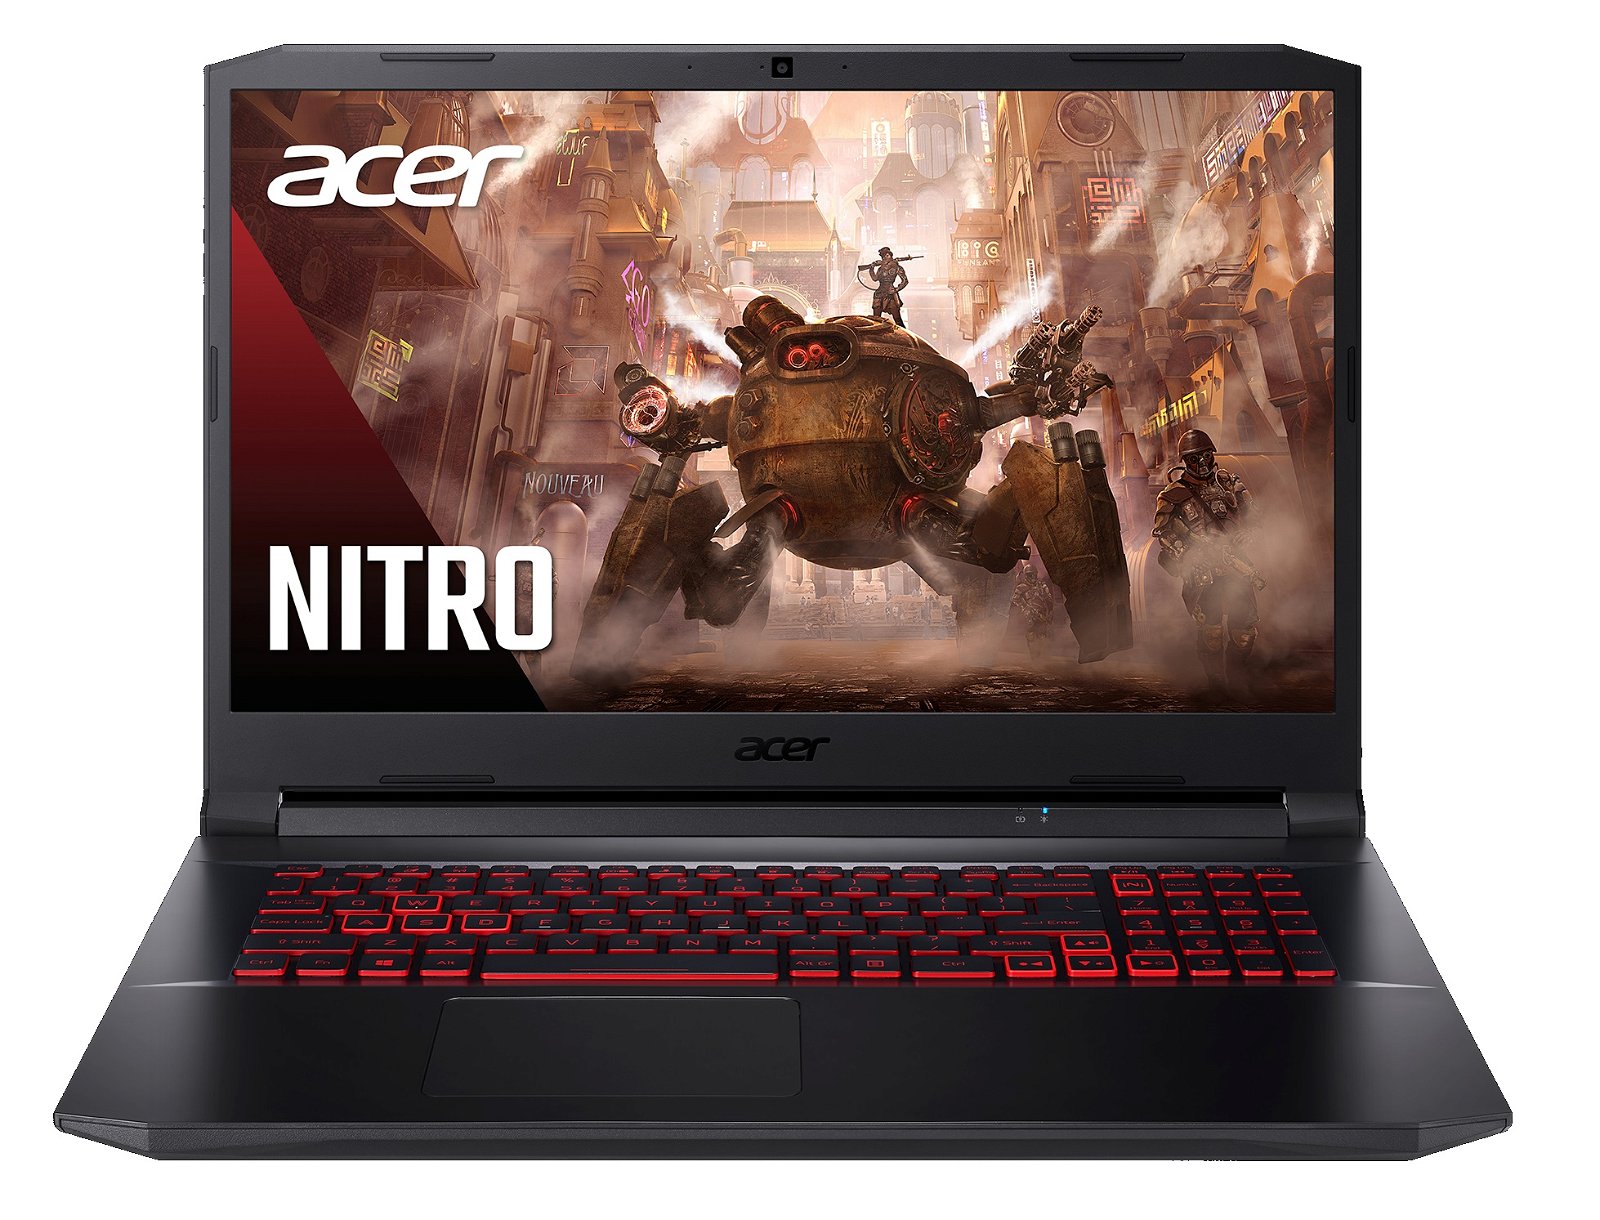 Acer Nitro 5 17.3 Inch AMD Ryzen 7 5800H 16GB RAM 512GB SSD GeForce RTX3060 6GB Gaming Laptop with Windows 11 + Free Gaming Mouse & Keyboard